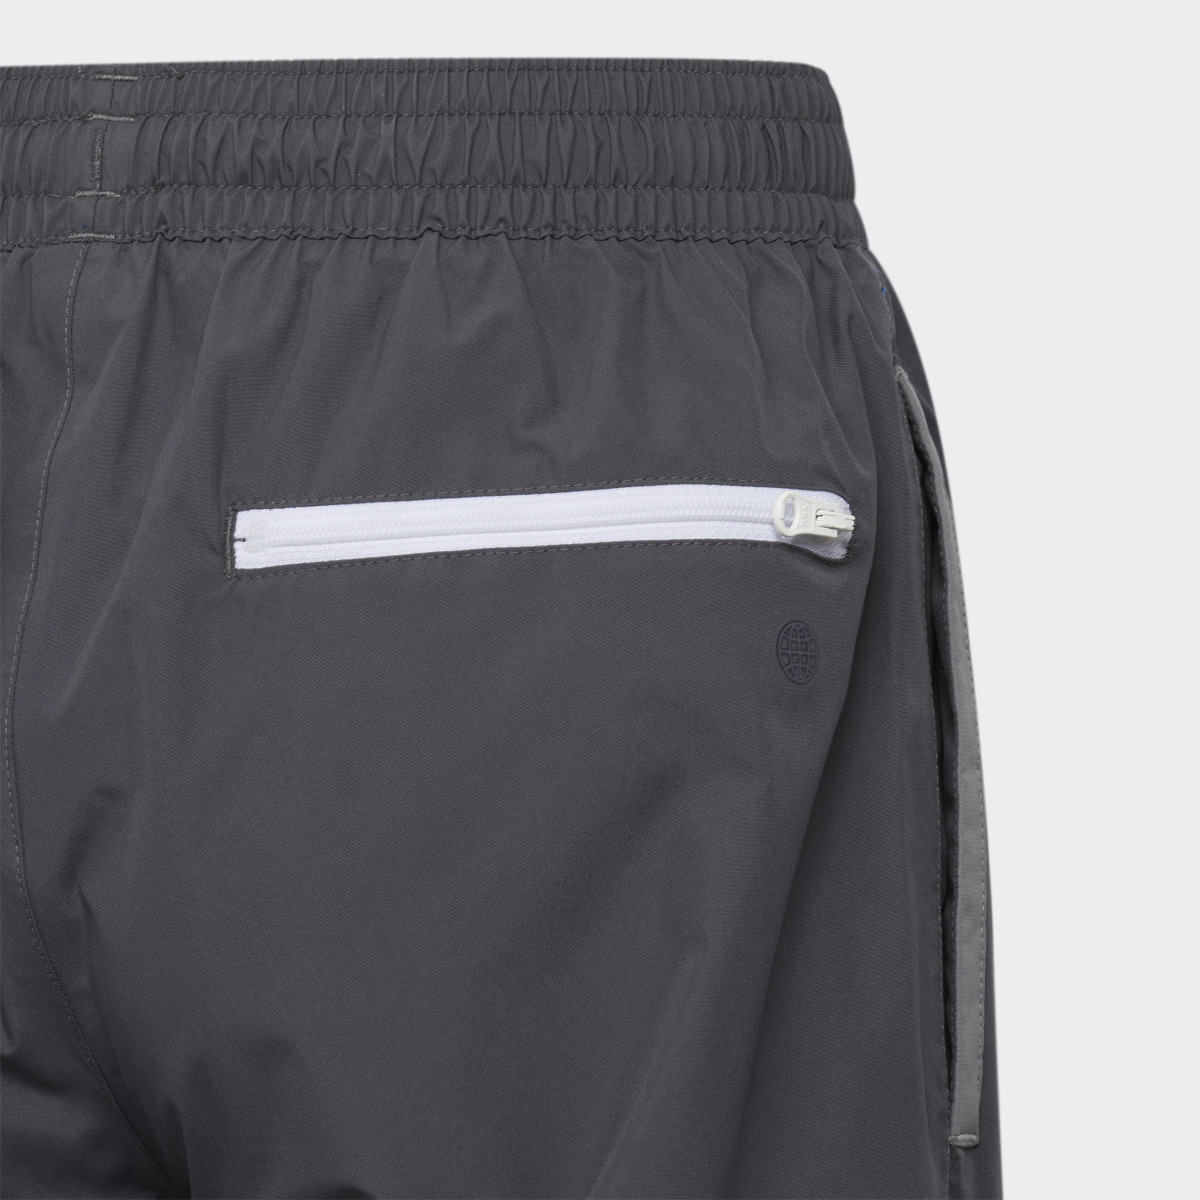 Adidas Provisional Golf Pants. 5